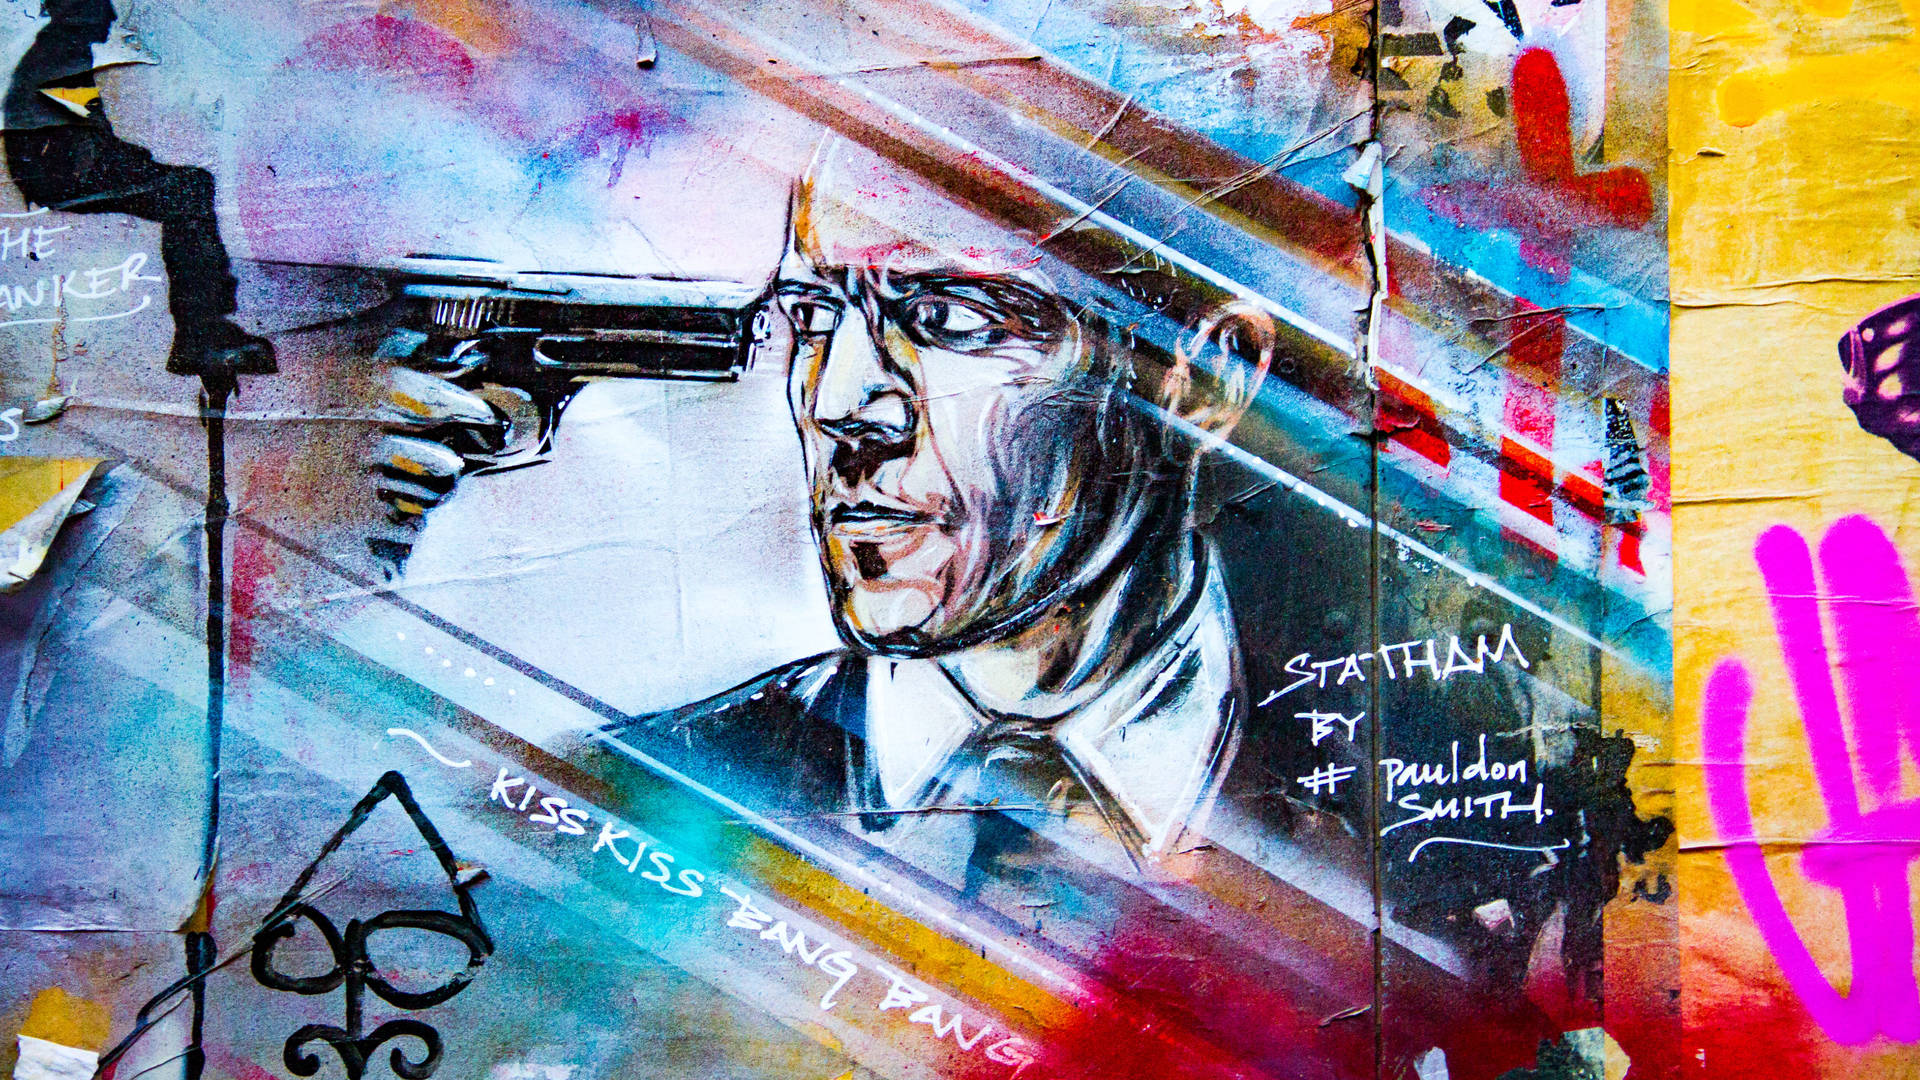 Jason Statham Street Art Background